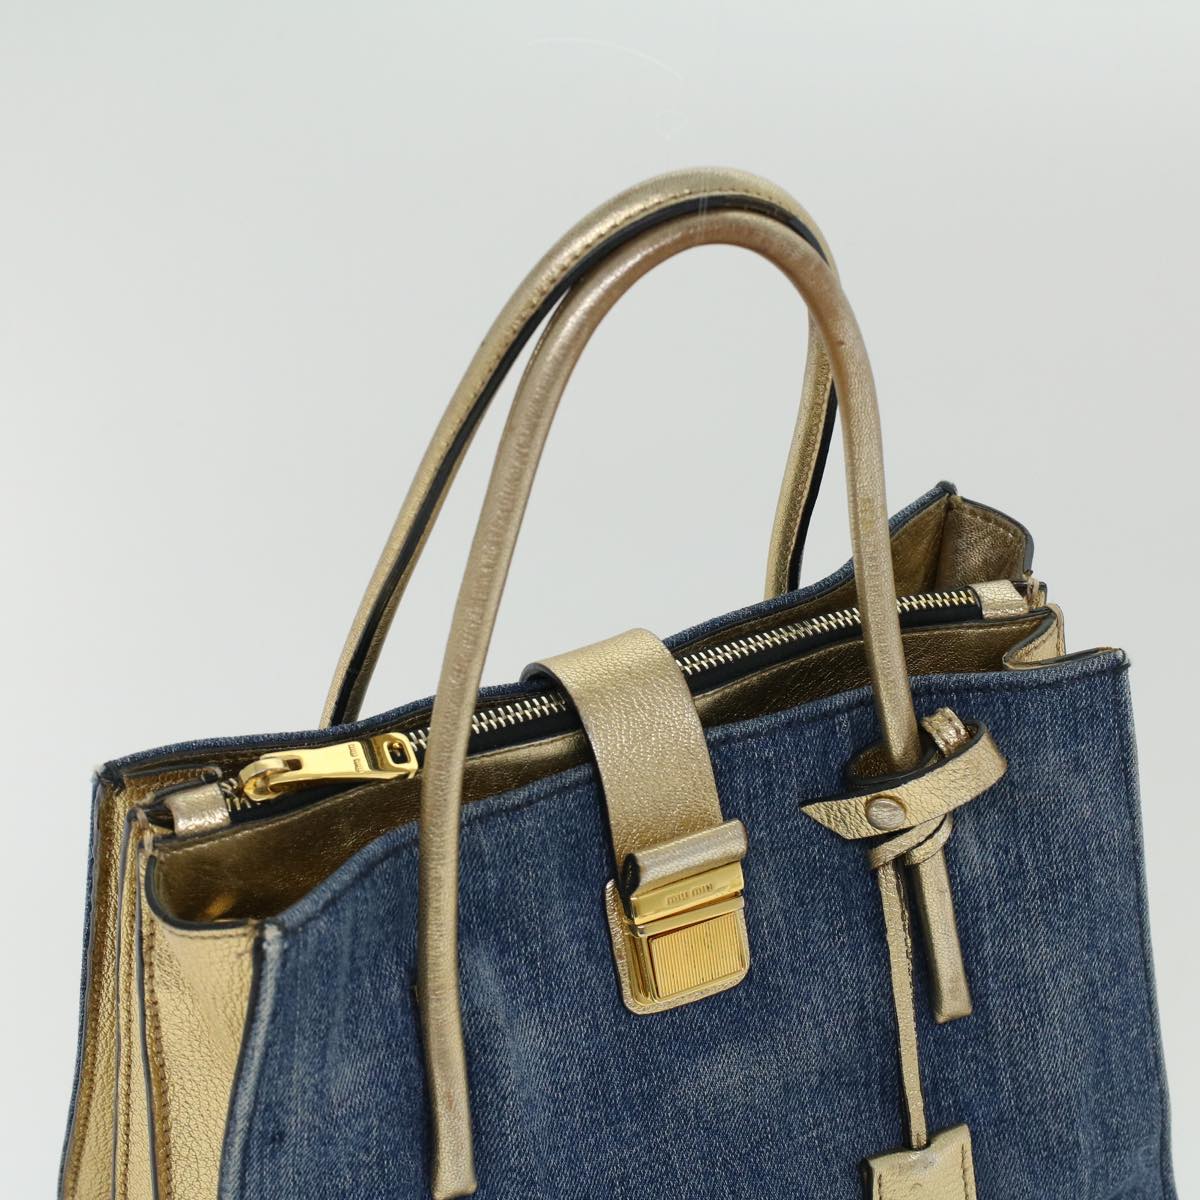 Miu Miu Hand Bag Denim Blue Auth ar8662